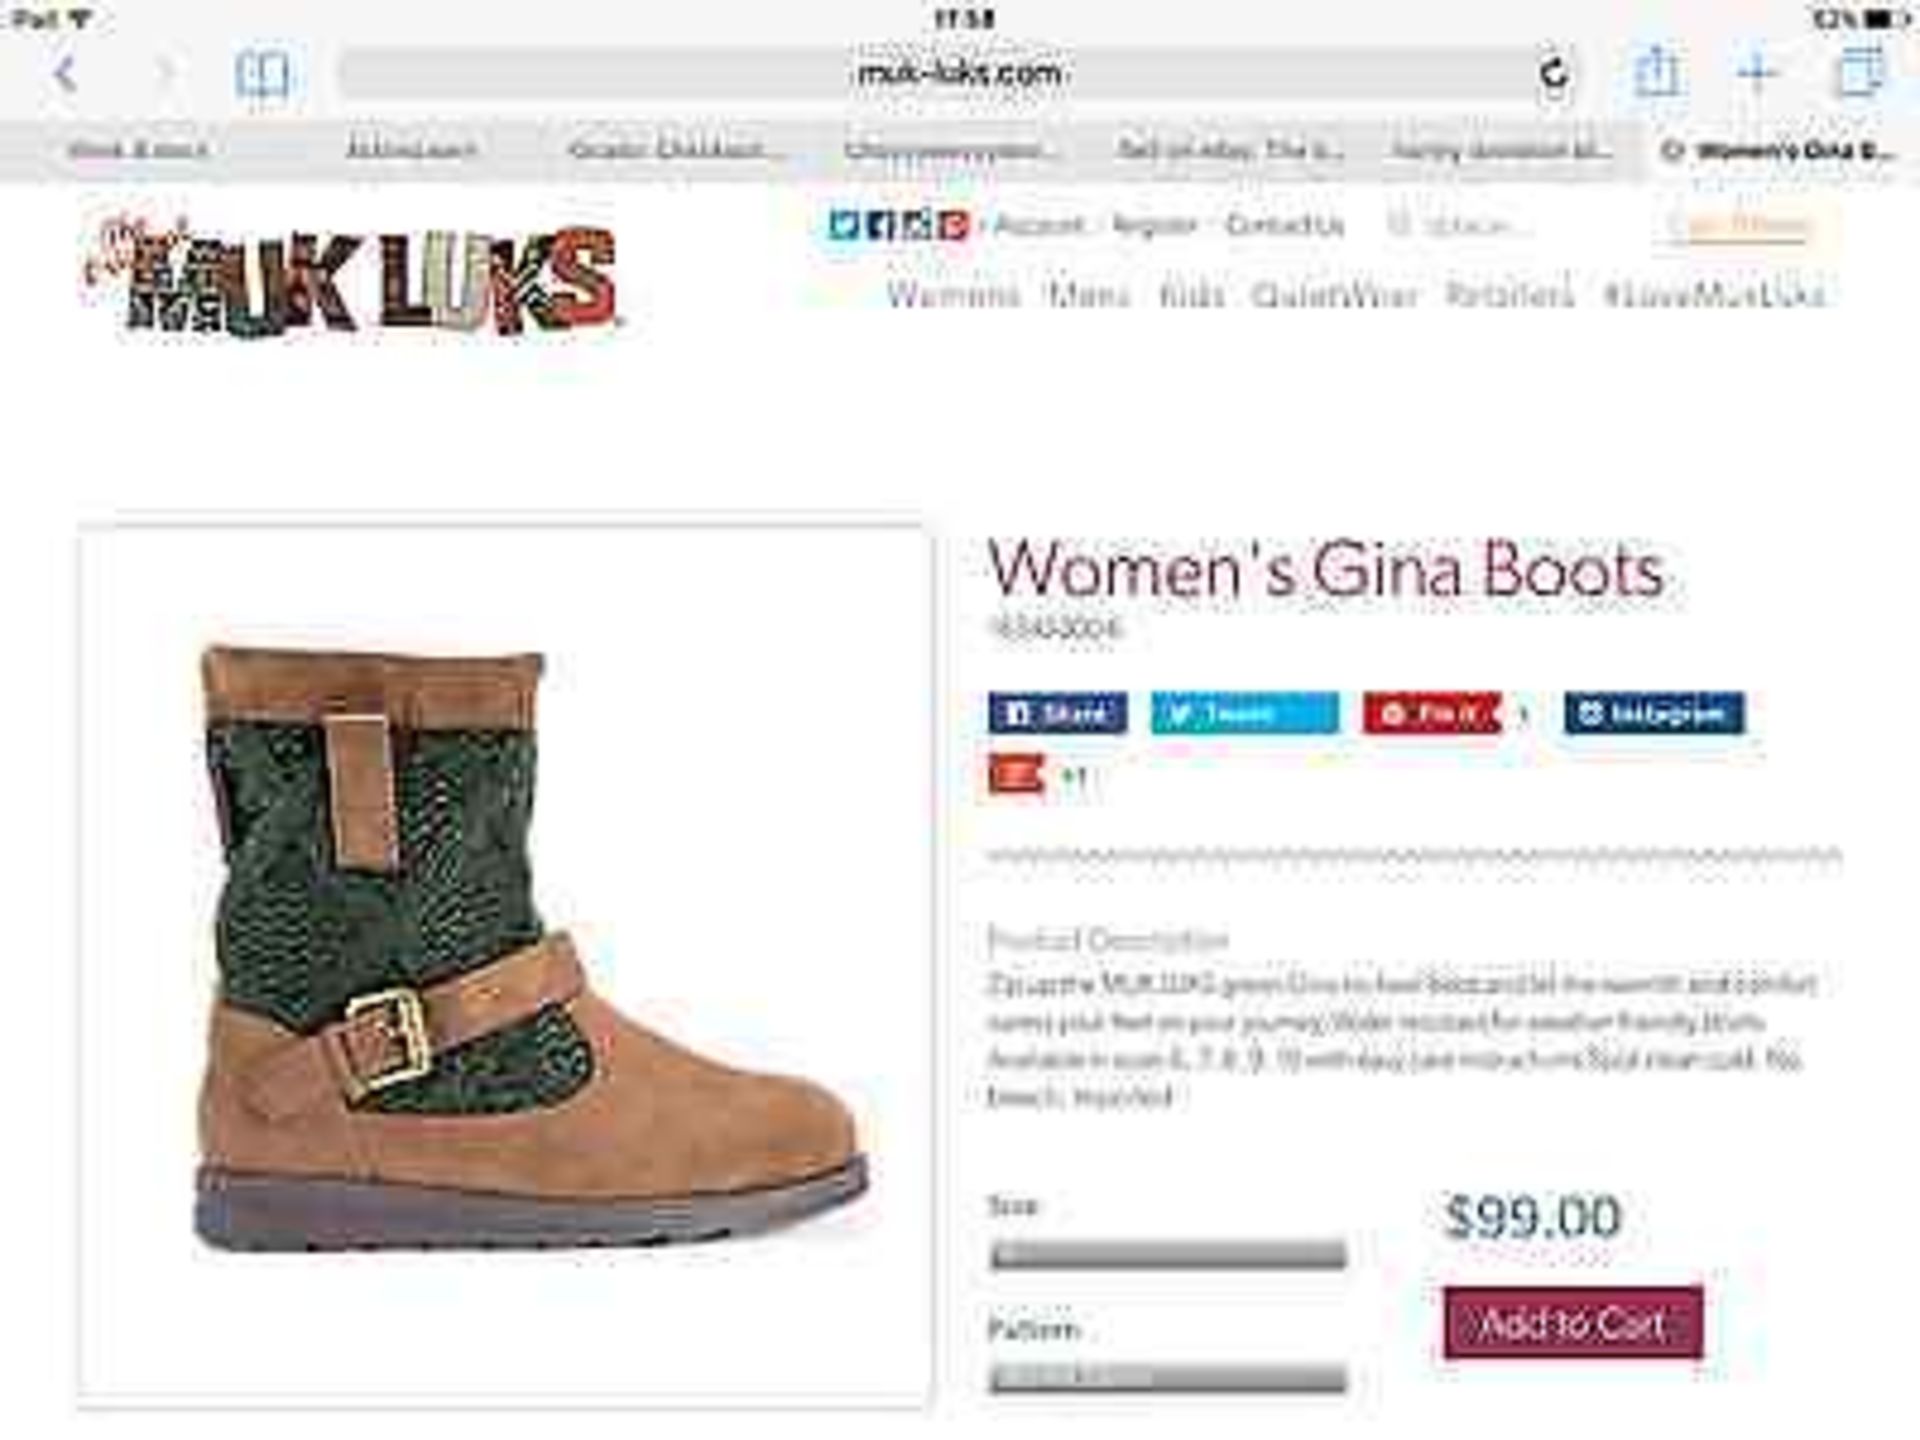 The Original Muk Luks Gina Boot, Size 5, RRP $99 (New without box)